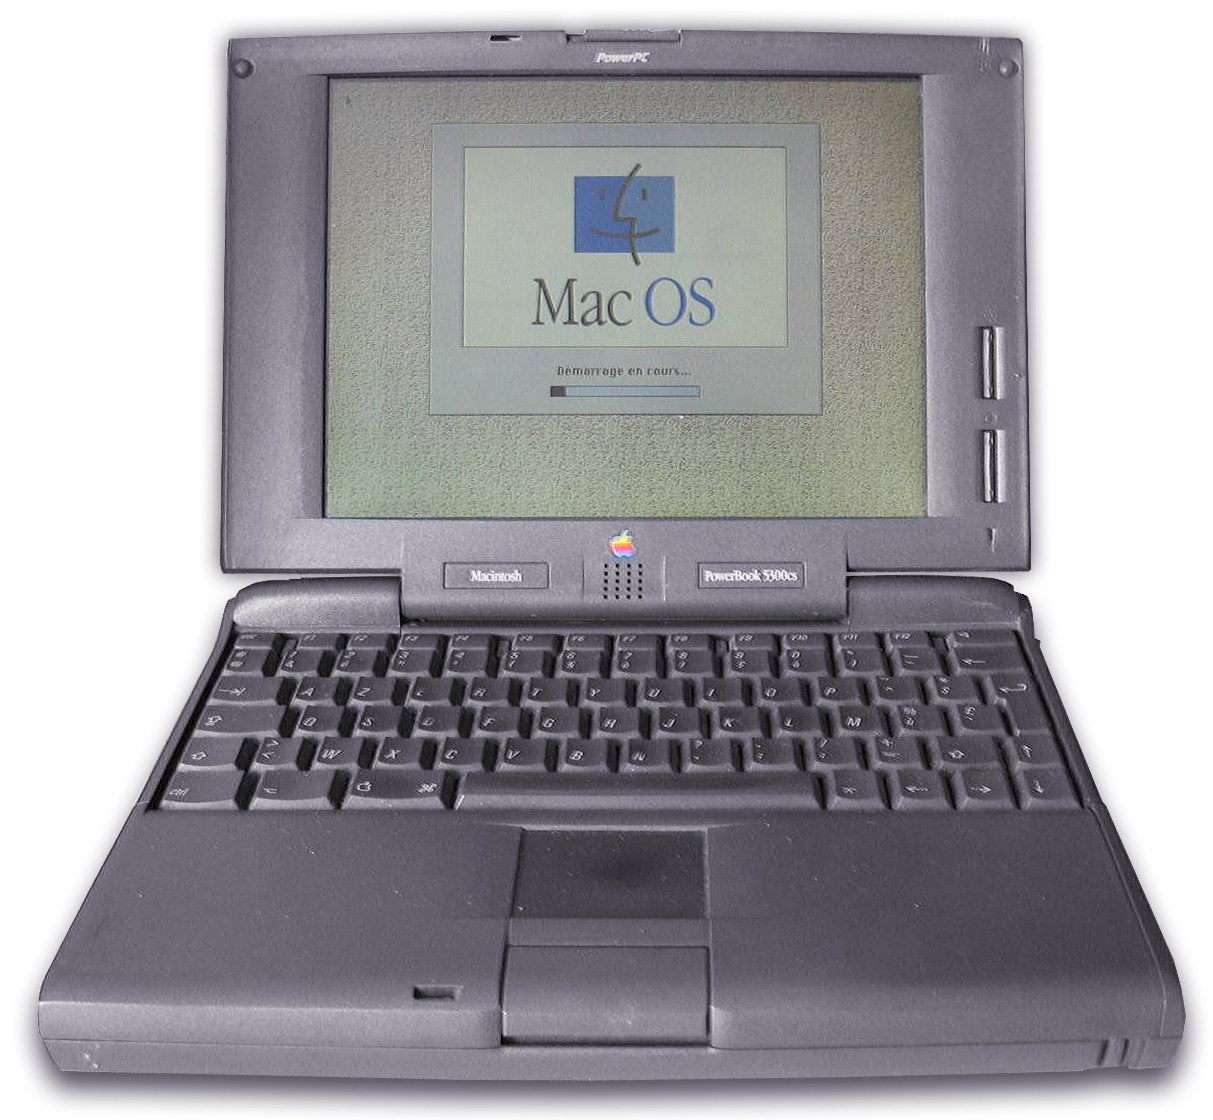 PowerBook 5300 - Wikipedia